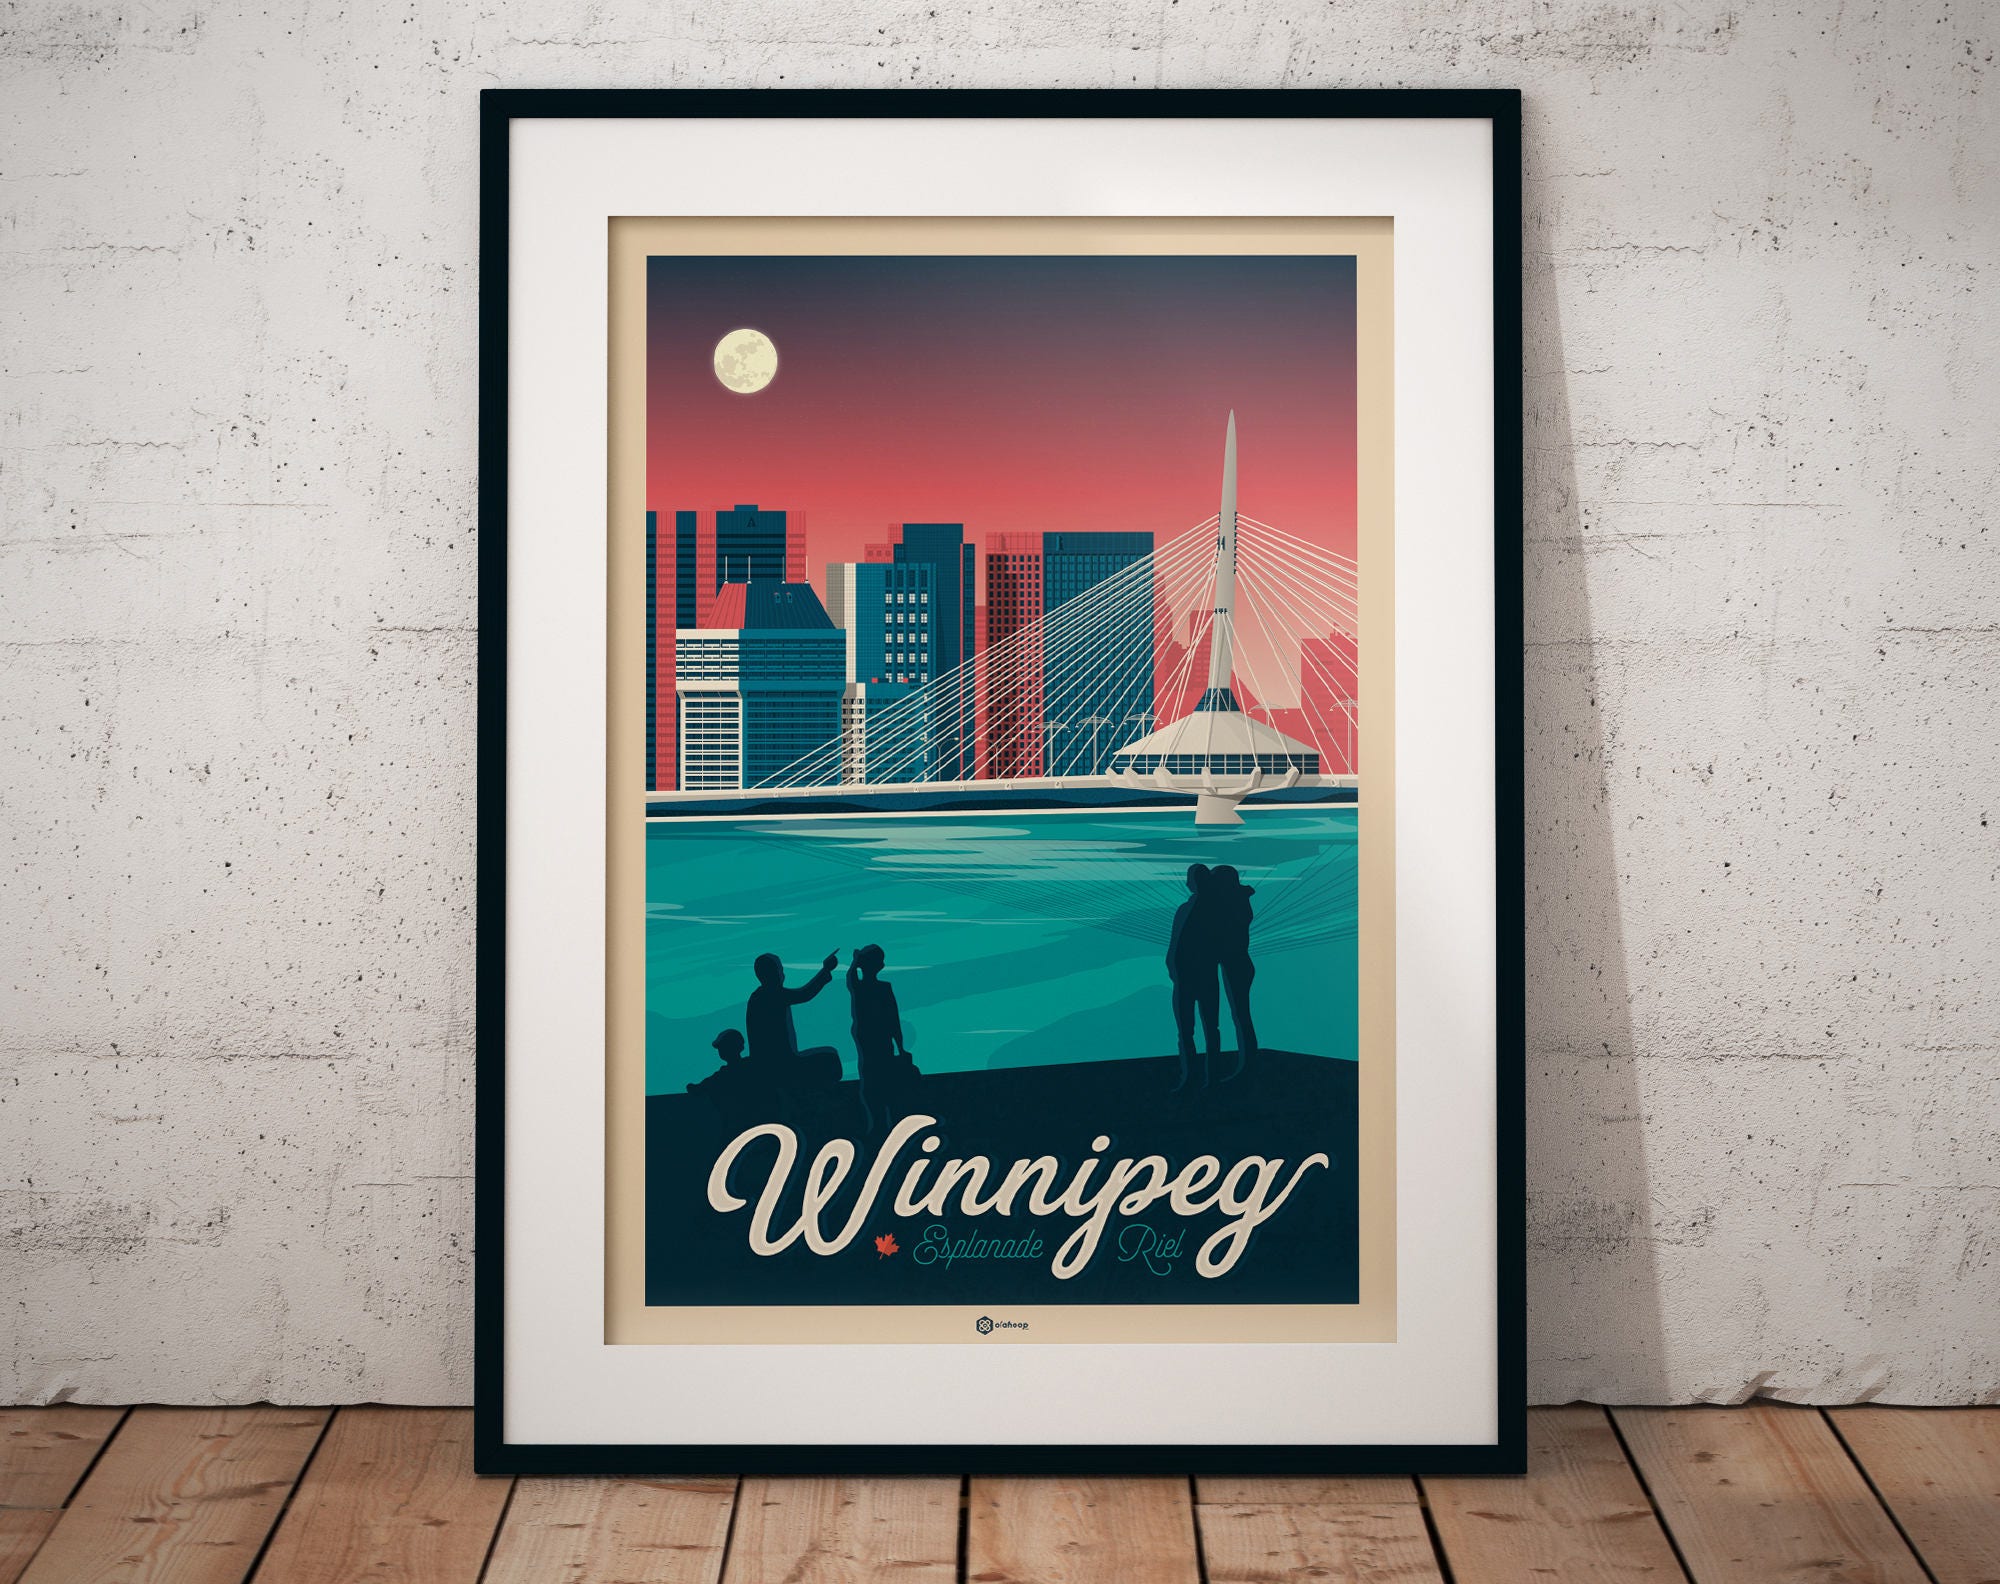  Winnipeg  Canada Vintage Print Vintage Travel Poster 